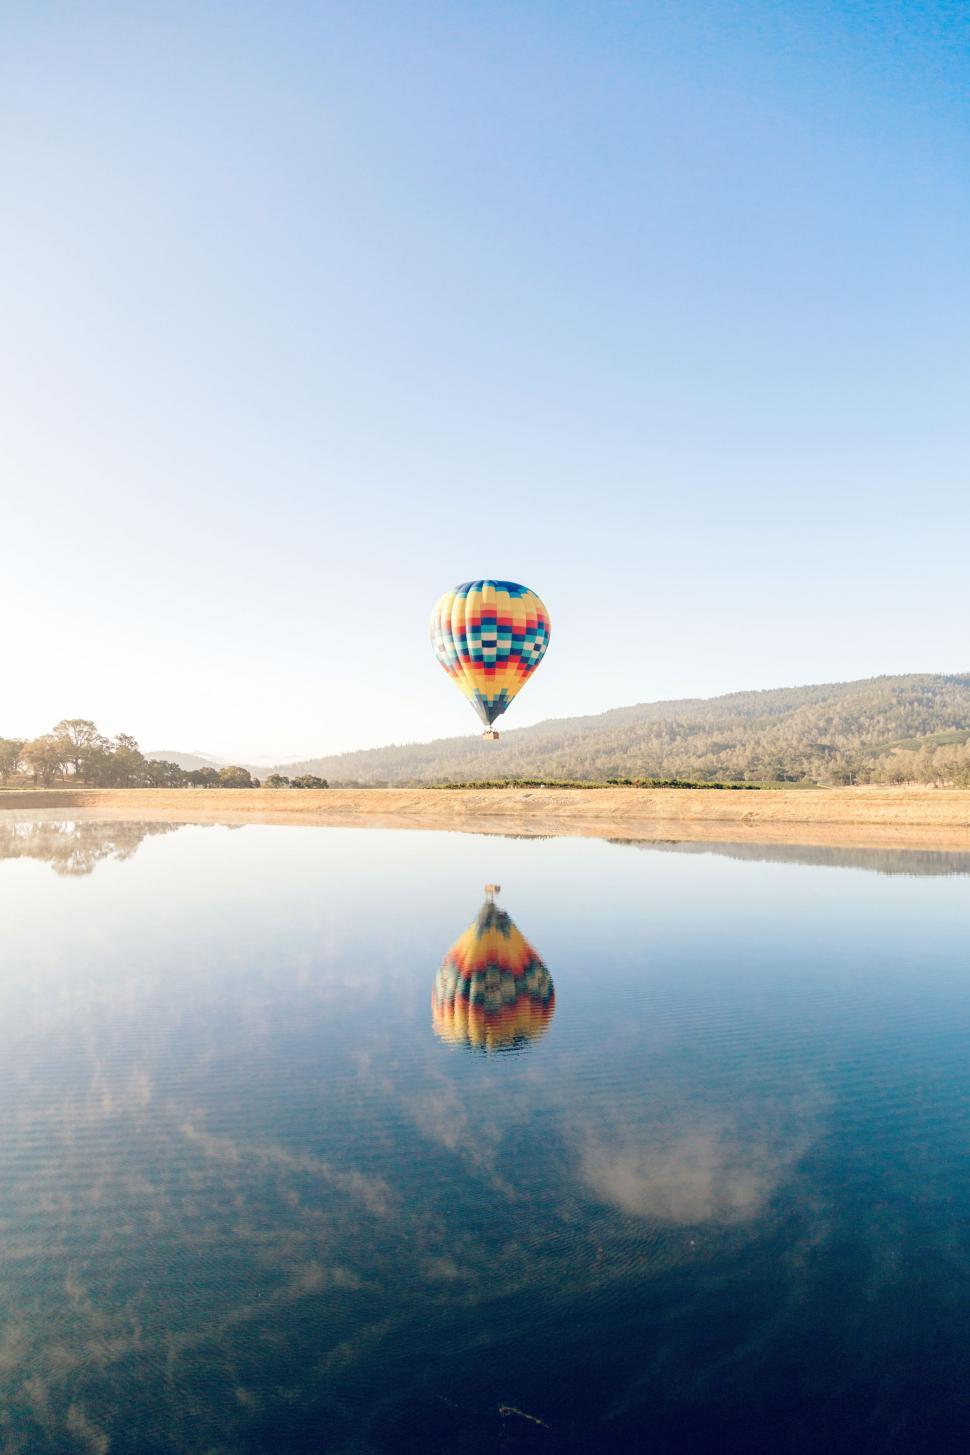 Free Image of Hot Air Balloon Over Lake  